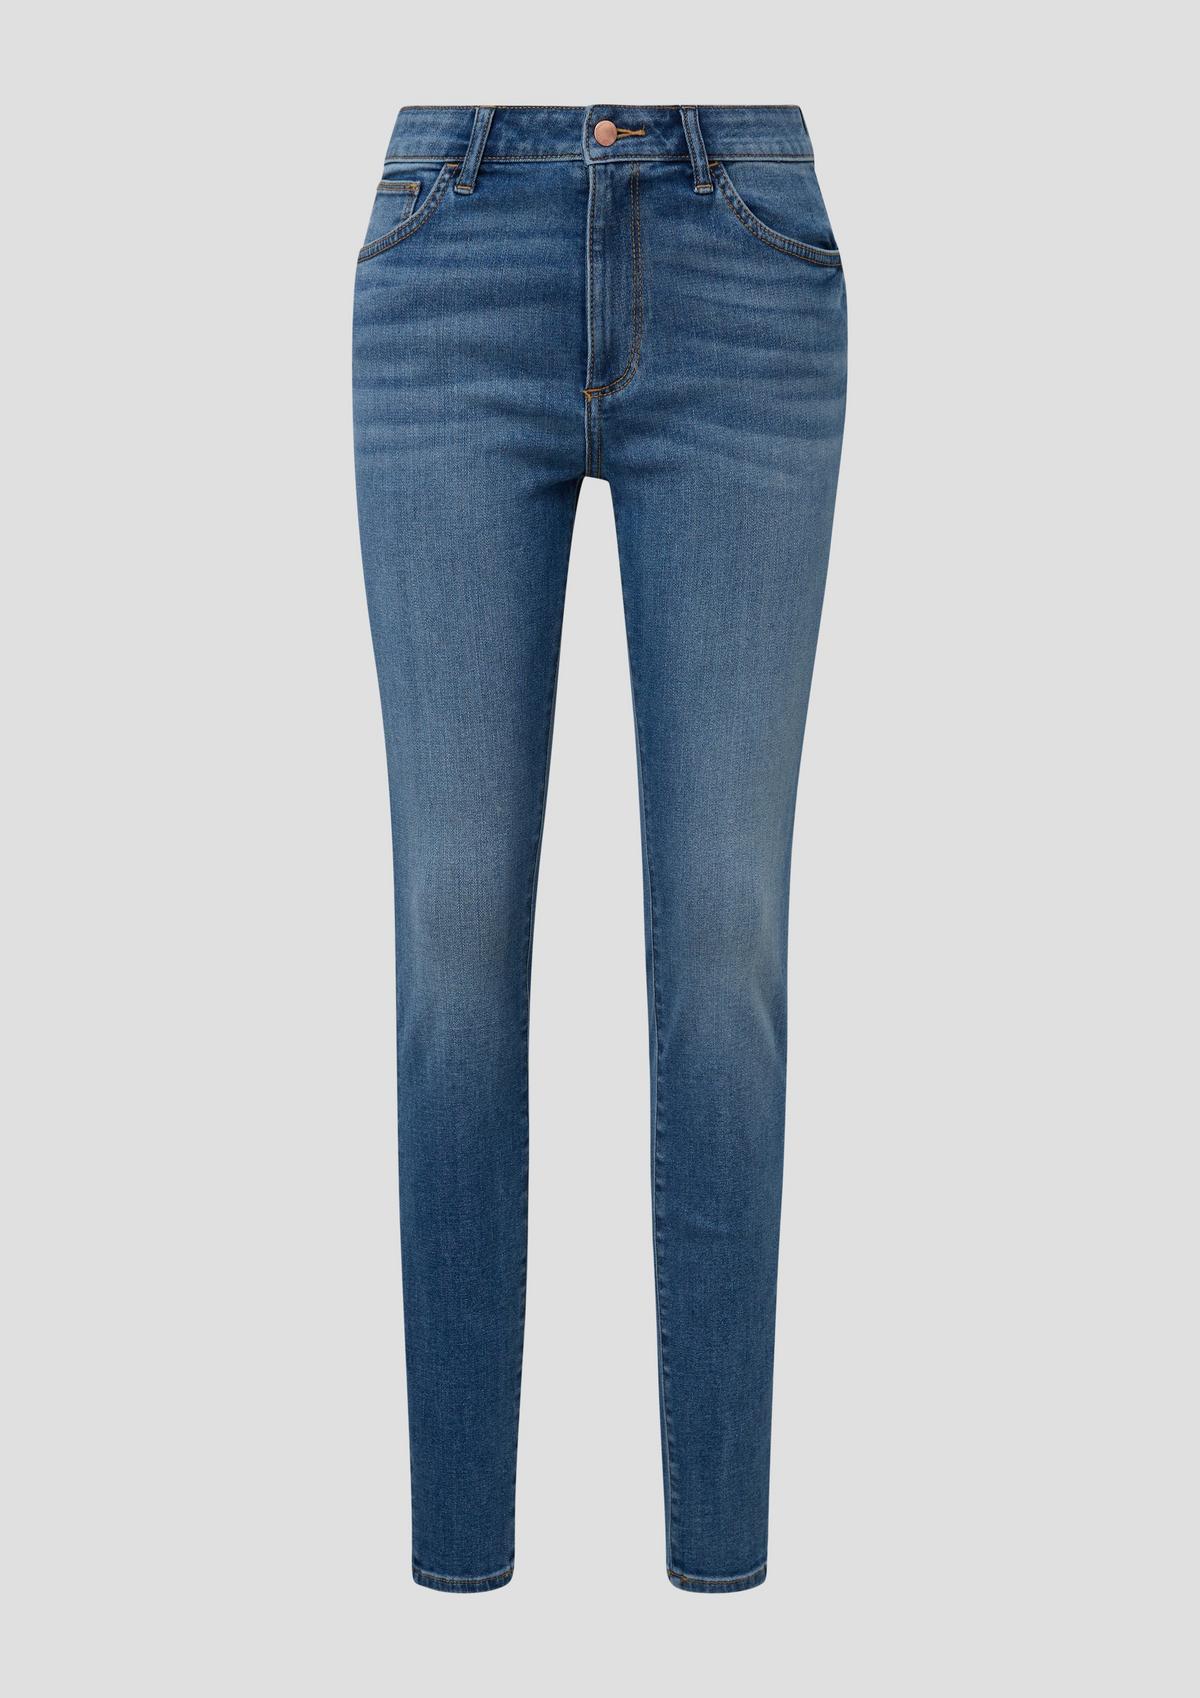 s.Oliver Jeans hlače / izjemno oprijet kroj super Skinny Fit / High Rise / oprijete hlačnice